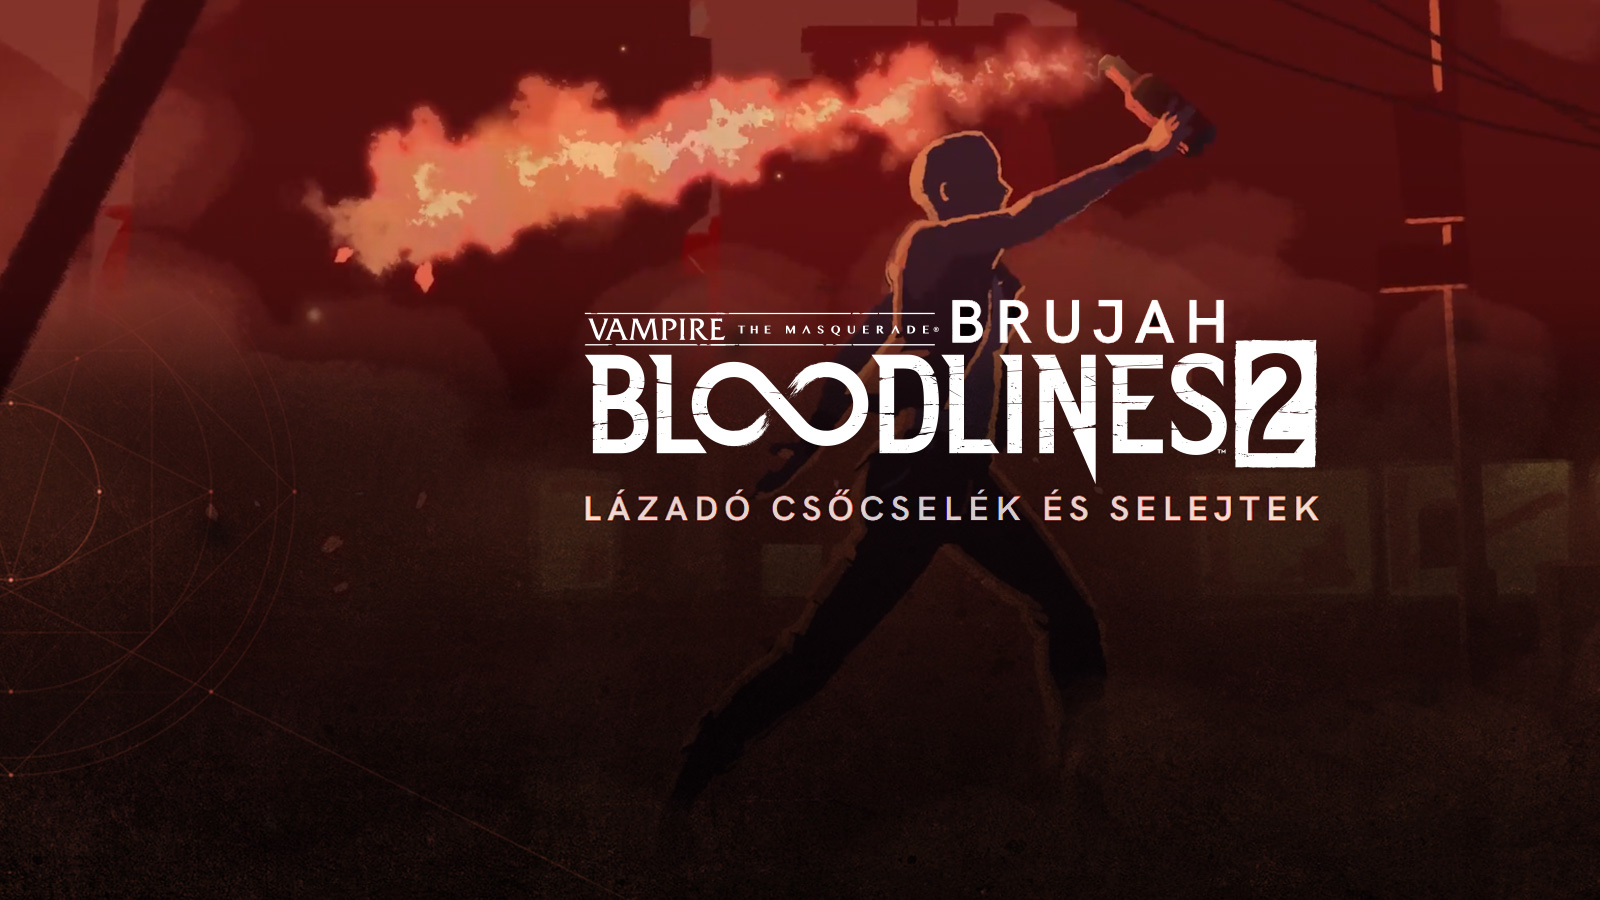 Vampire: the Masquerade - Bloodlines 2 Brujah